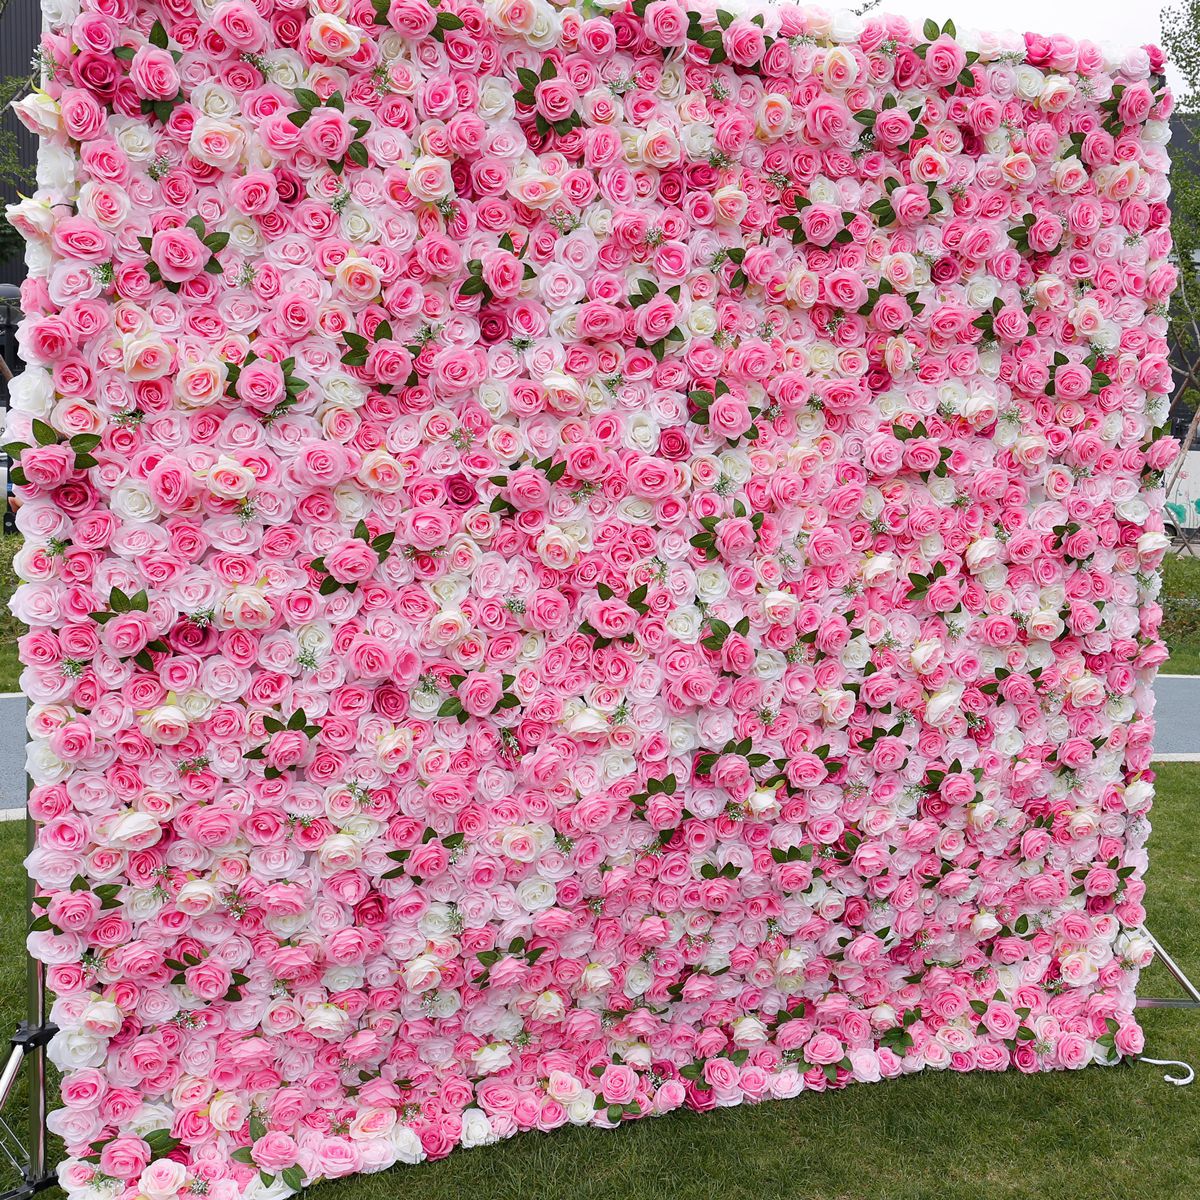 ʻO ka lole ʻulaʻula lalo simulation flower wall male floral art rose wall